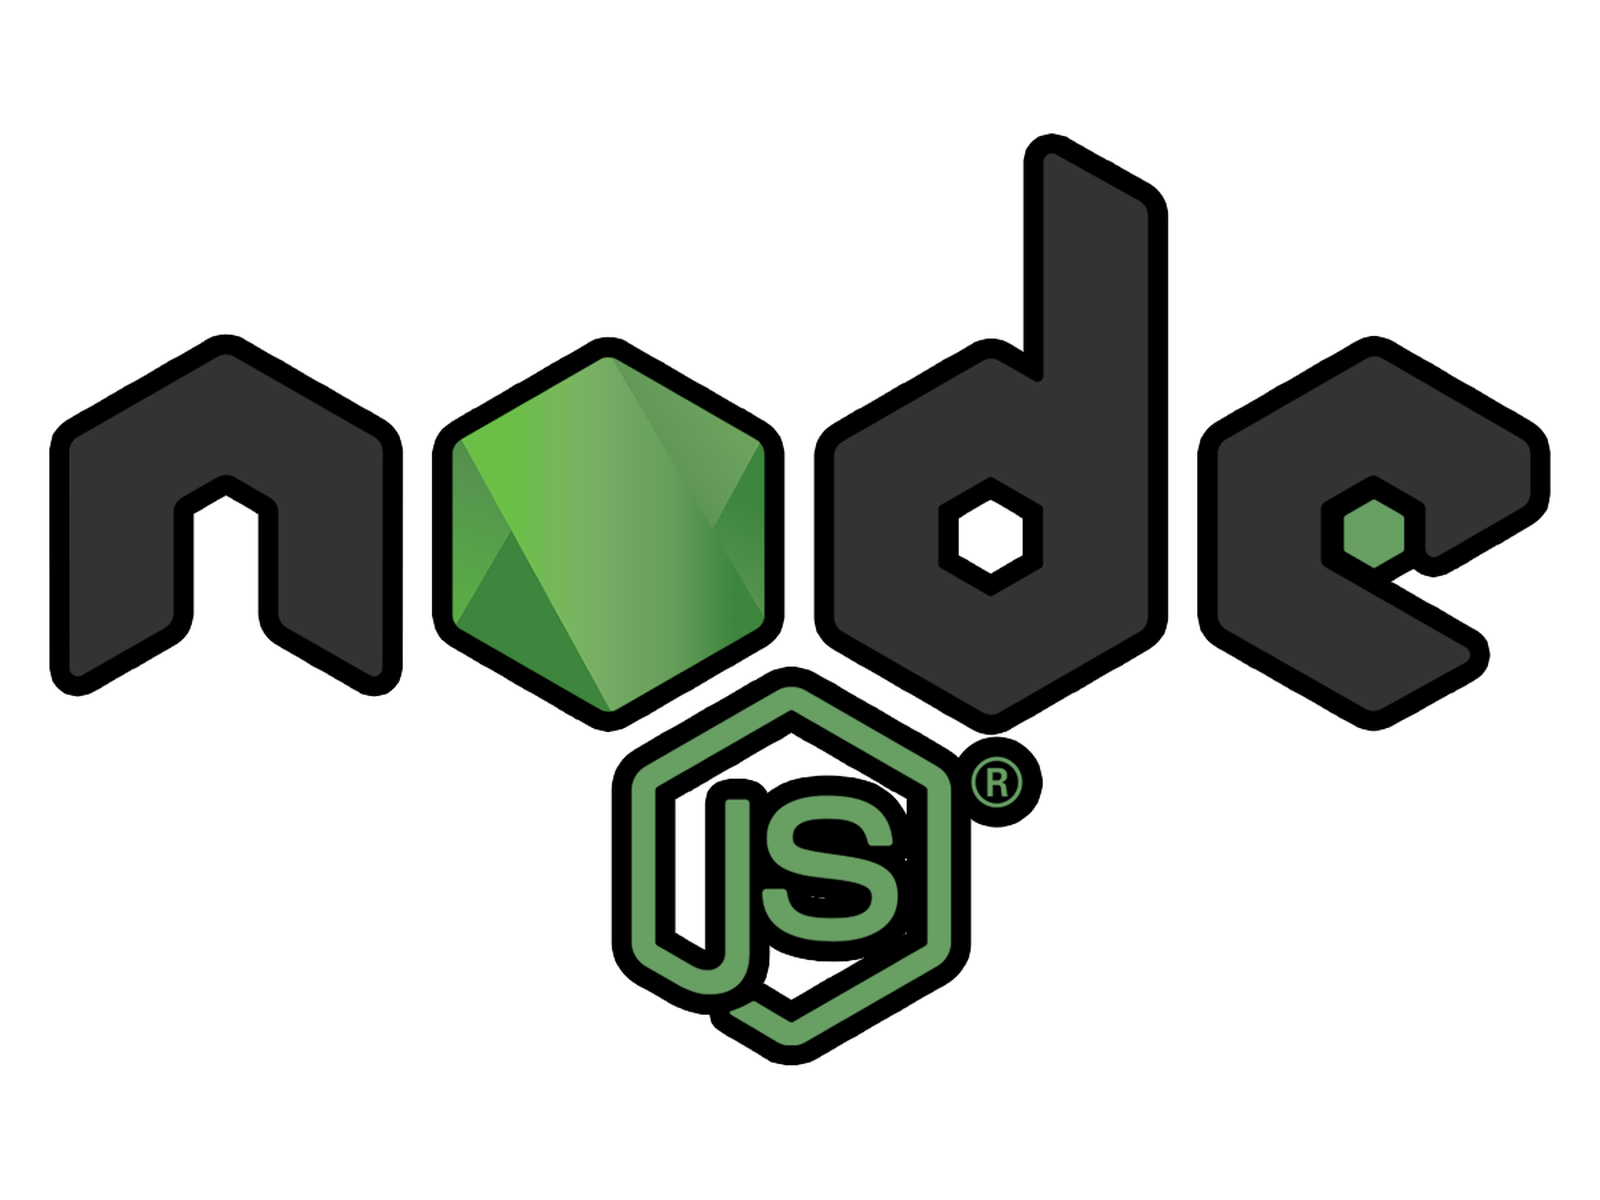 Https nodejs org. Node js иконка. Node js logo transparent. Последняя версия node js. Node js без фона.